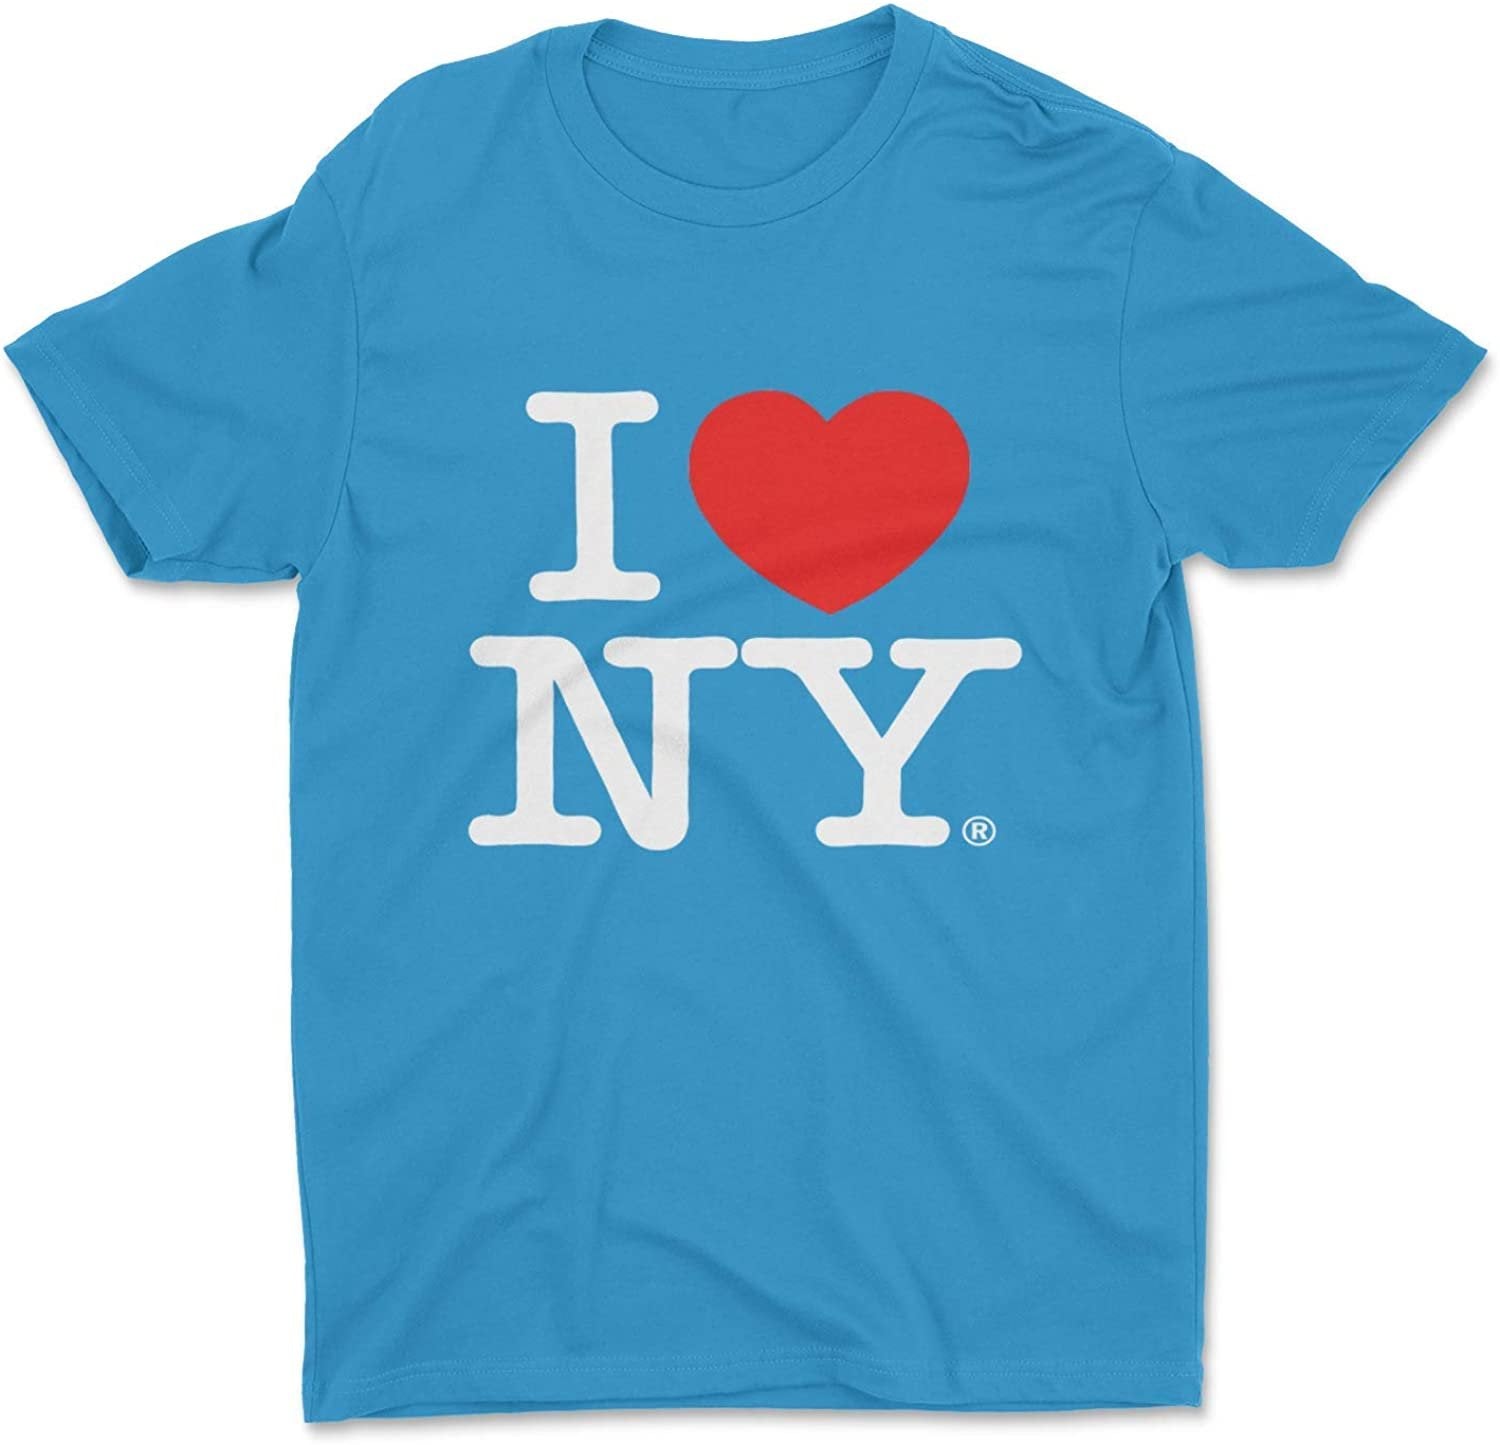 Ich liebe NY Kinder T-Shirt Türkis